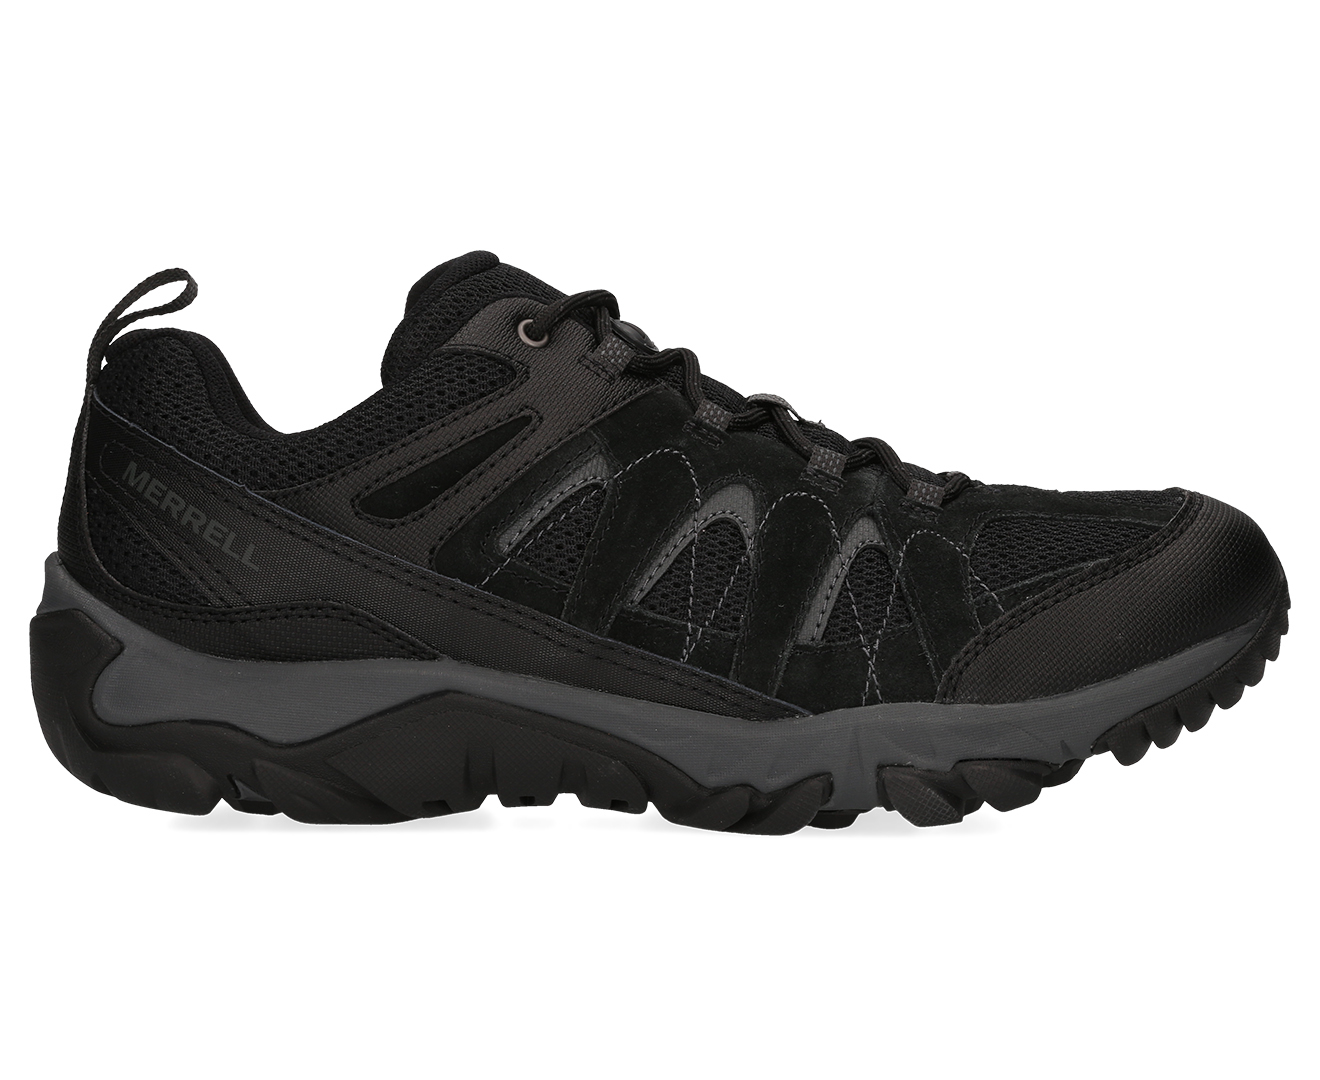 Merrell Men's Outmost Vent Shoe - Black | eBay